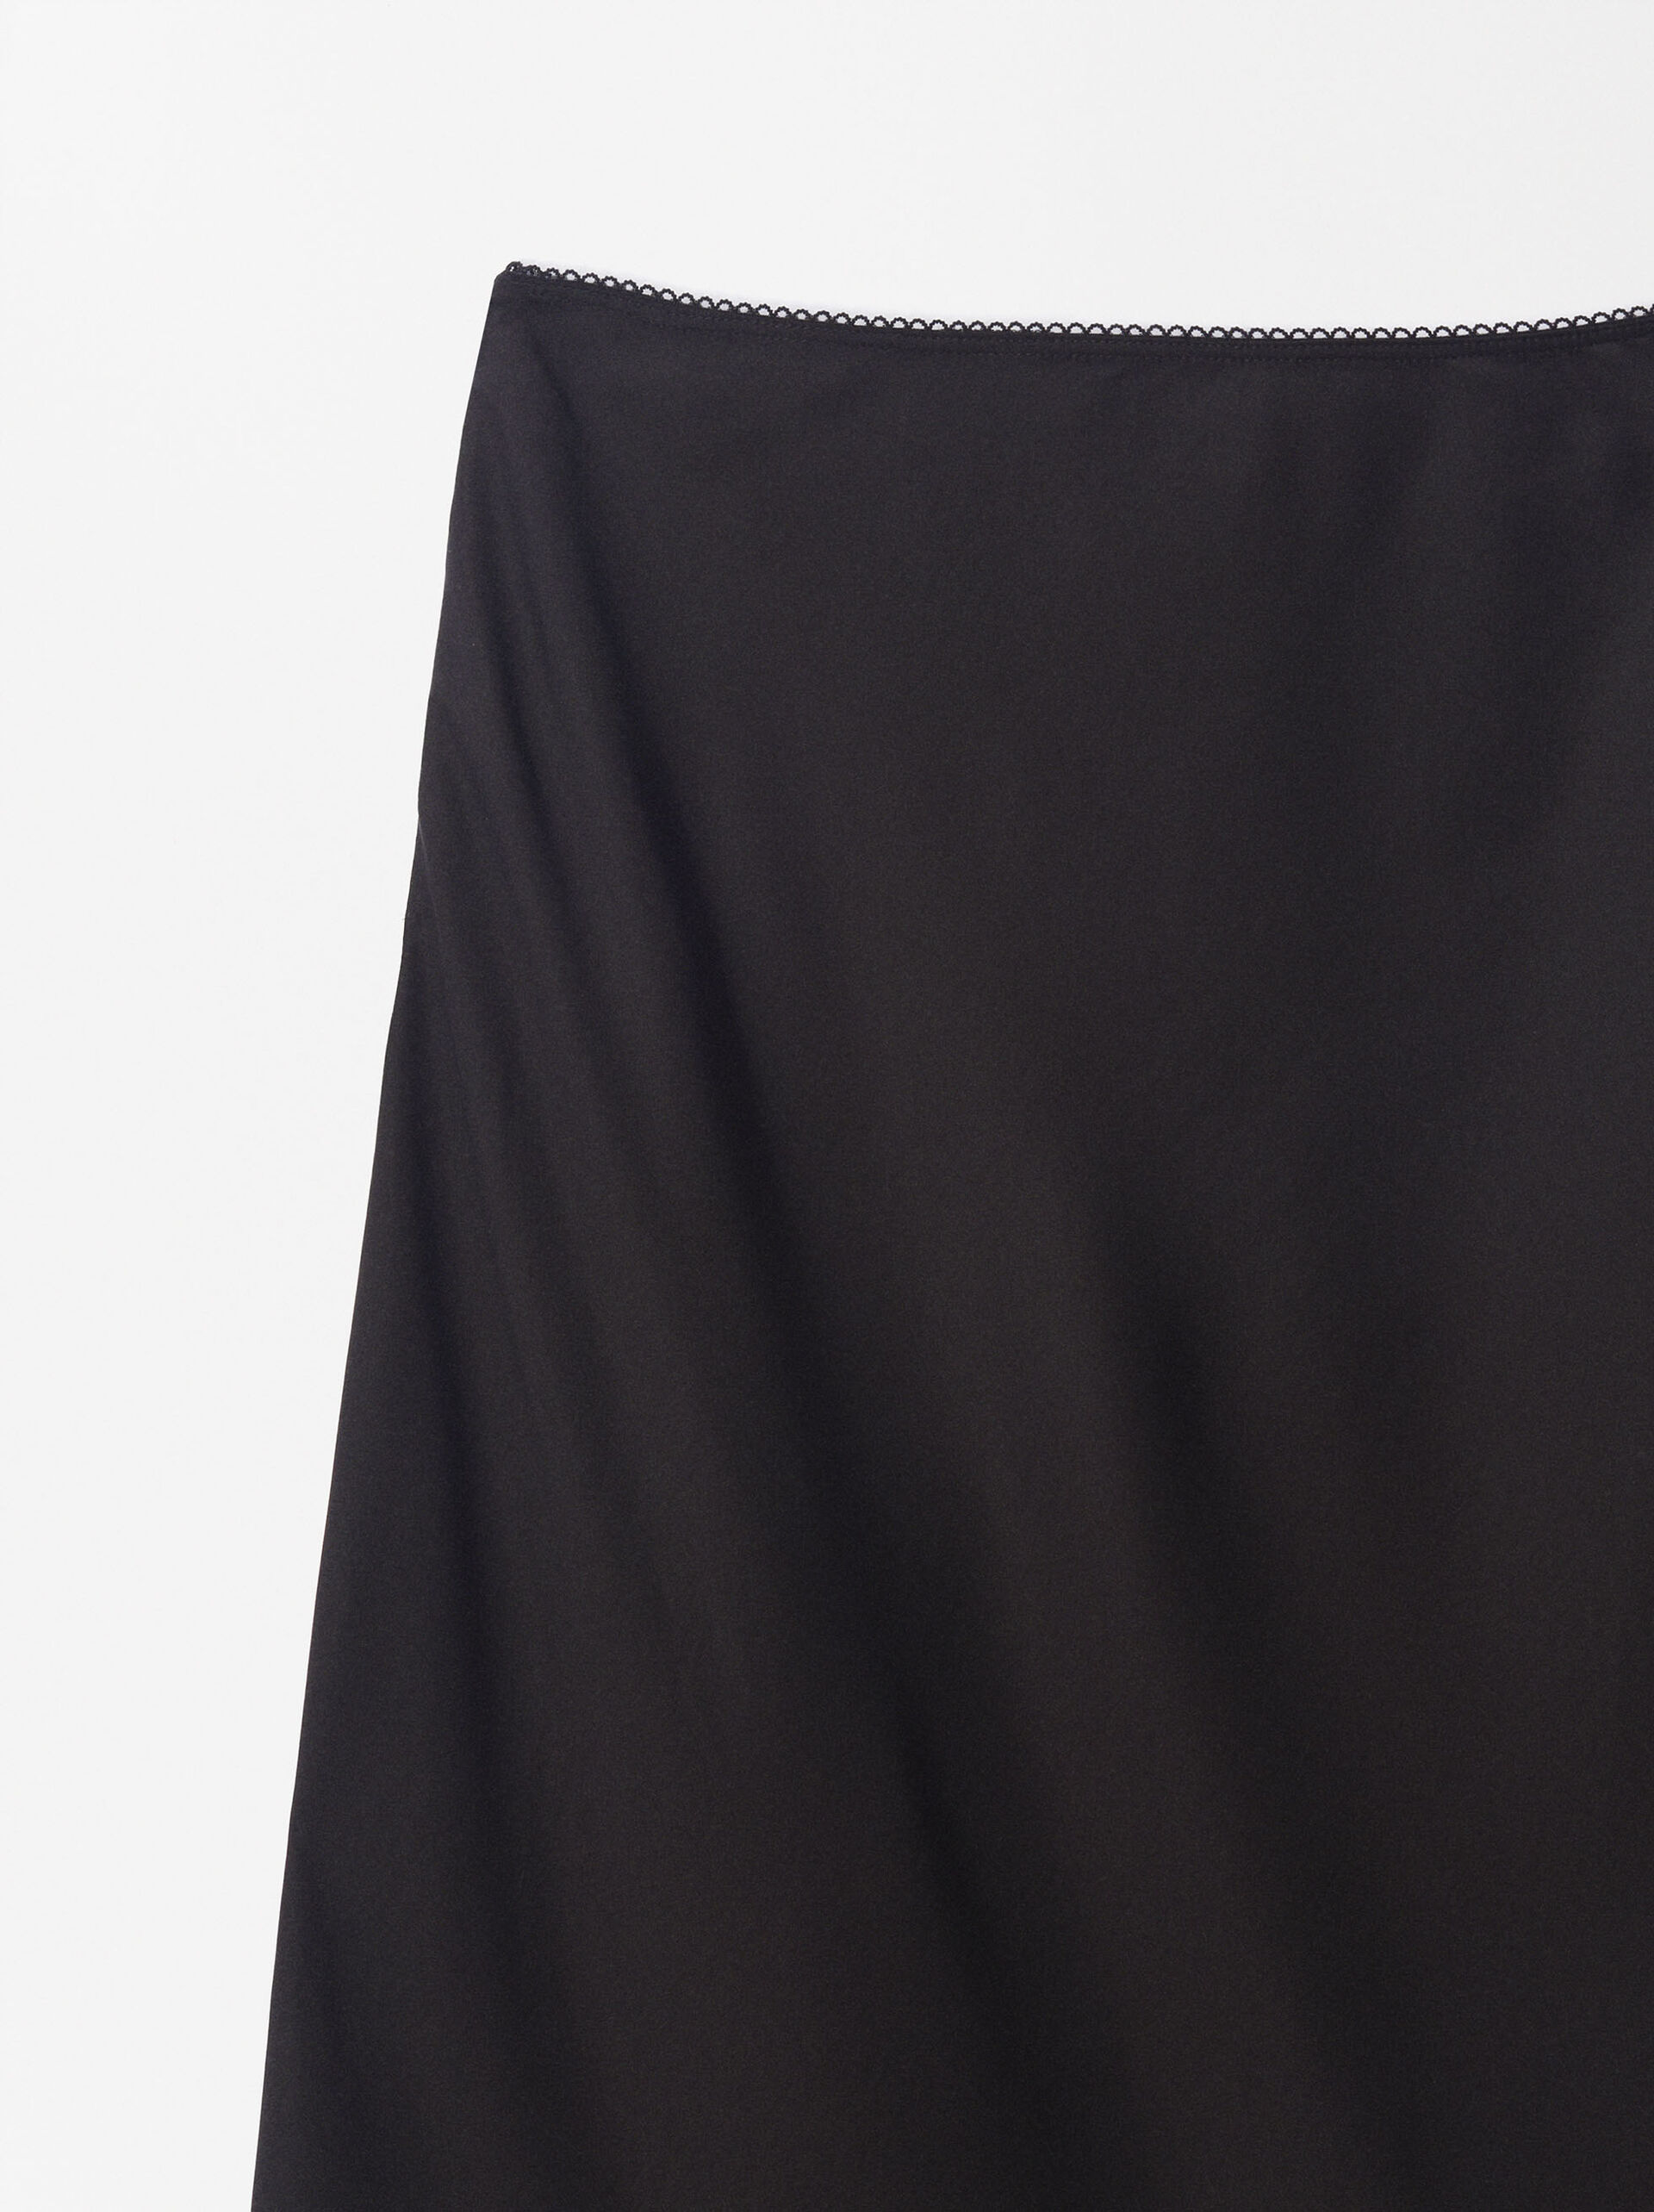 Midi Skirt With Elastic Waistband image number 6.0